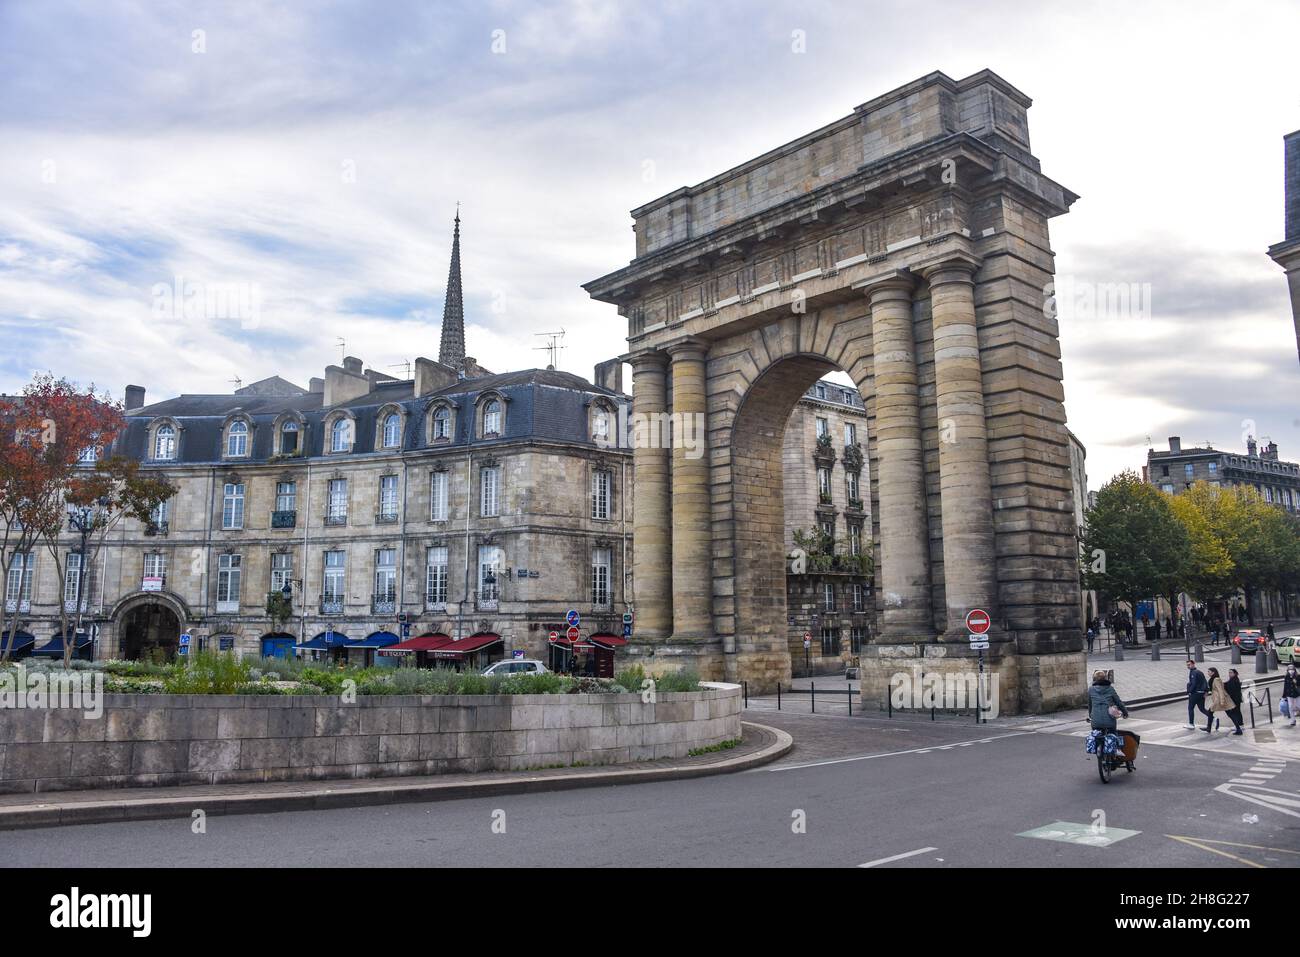 Bordeaux, France - 8 Nov, 2021: Port du Bourgogne, Landmark Roman-style stone arch built in the 1750s as a symbolic gateway to the city Stock Photo